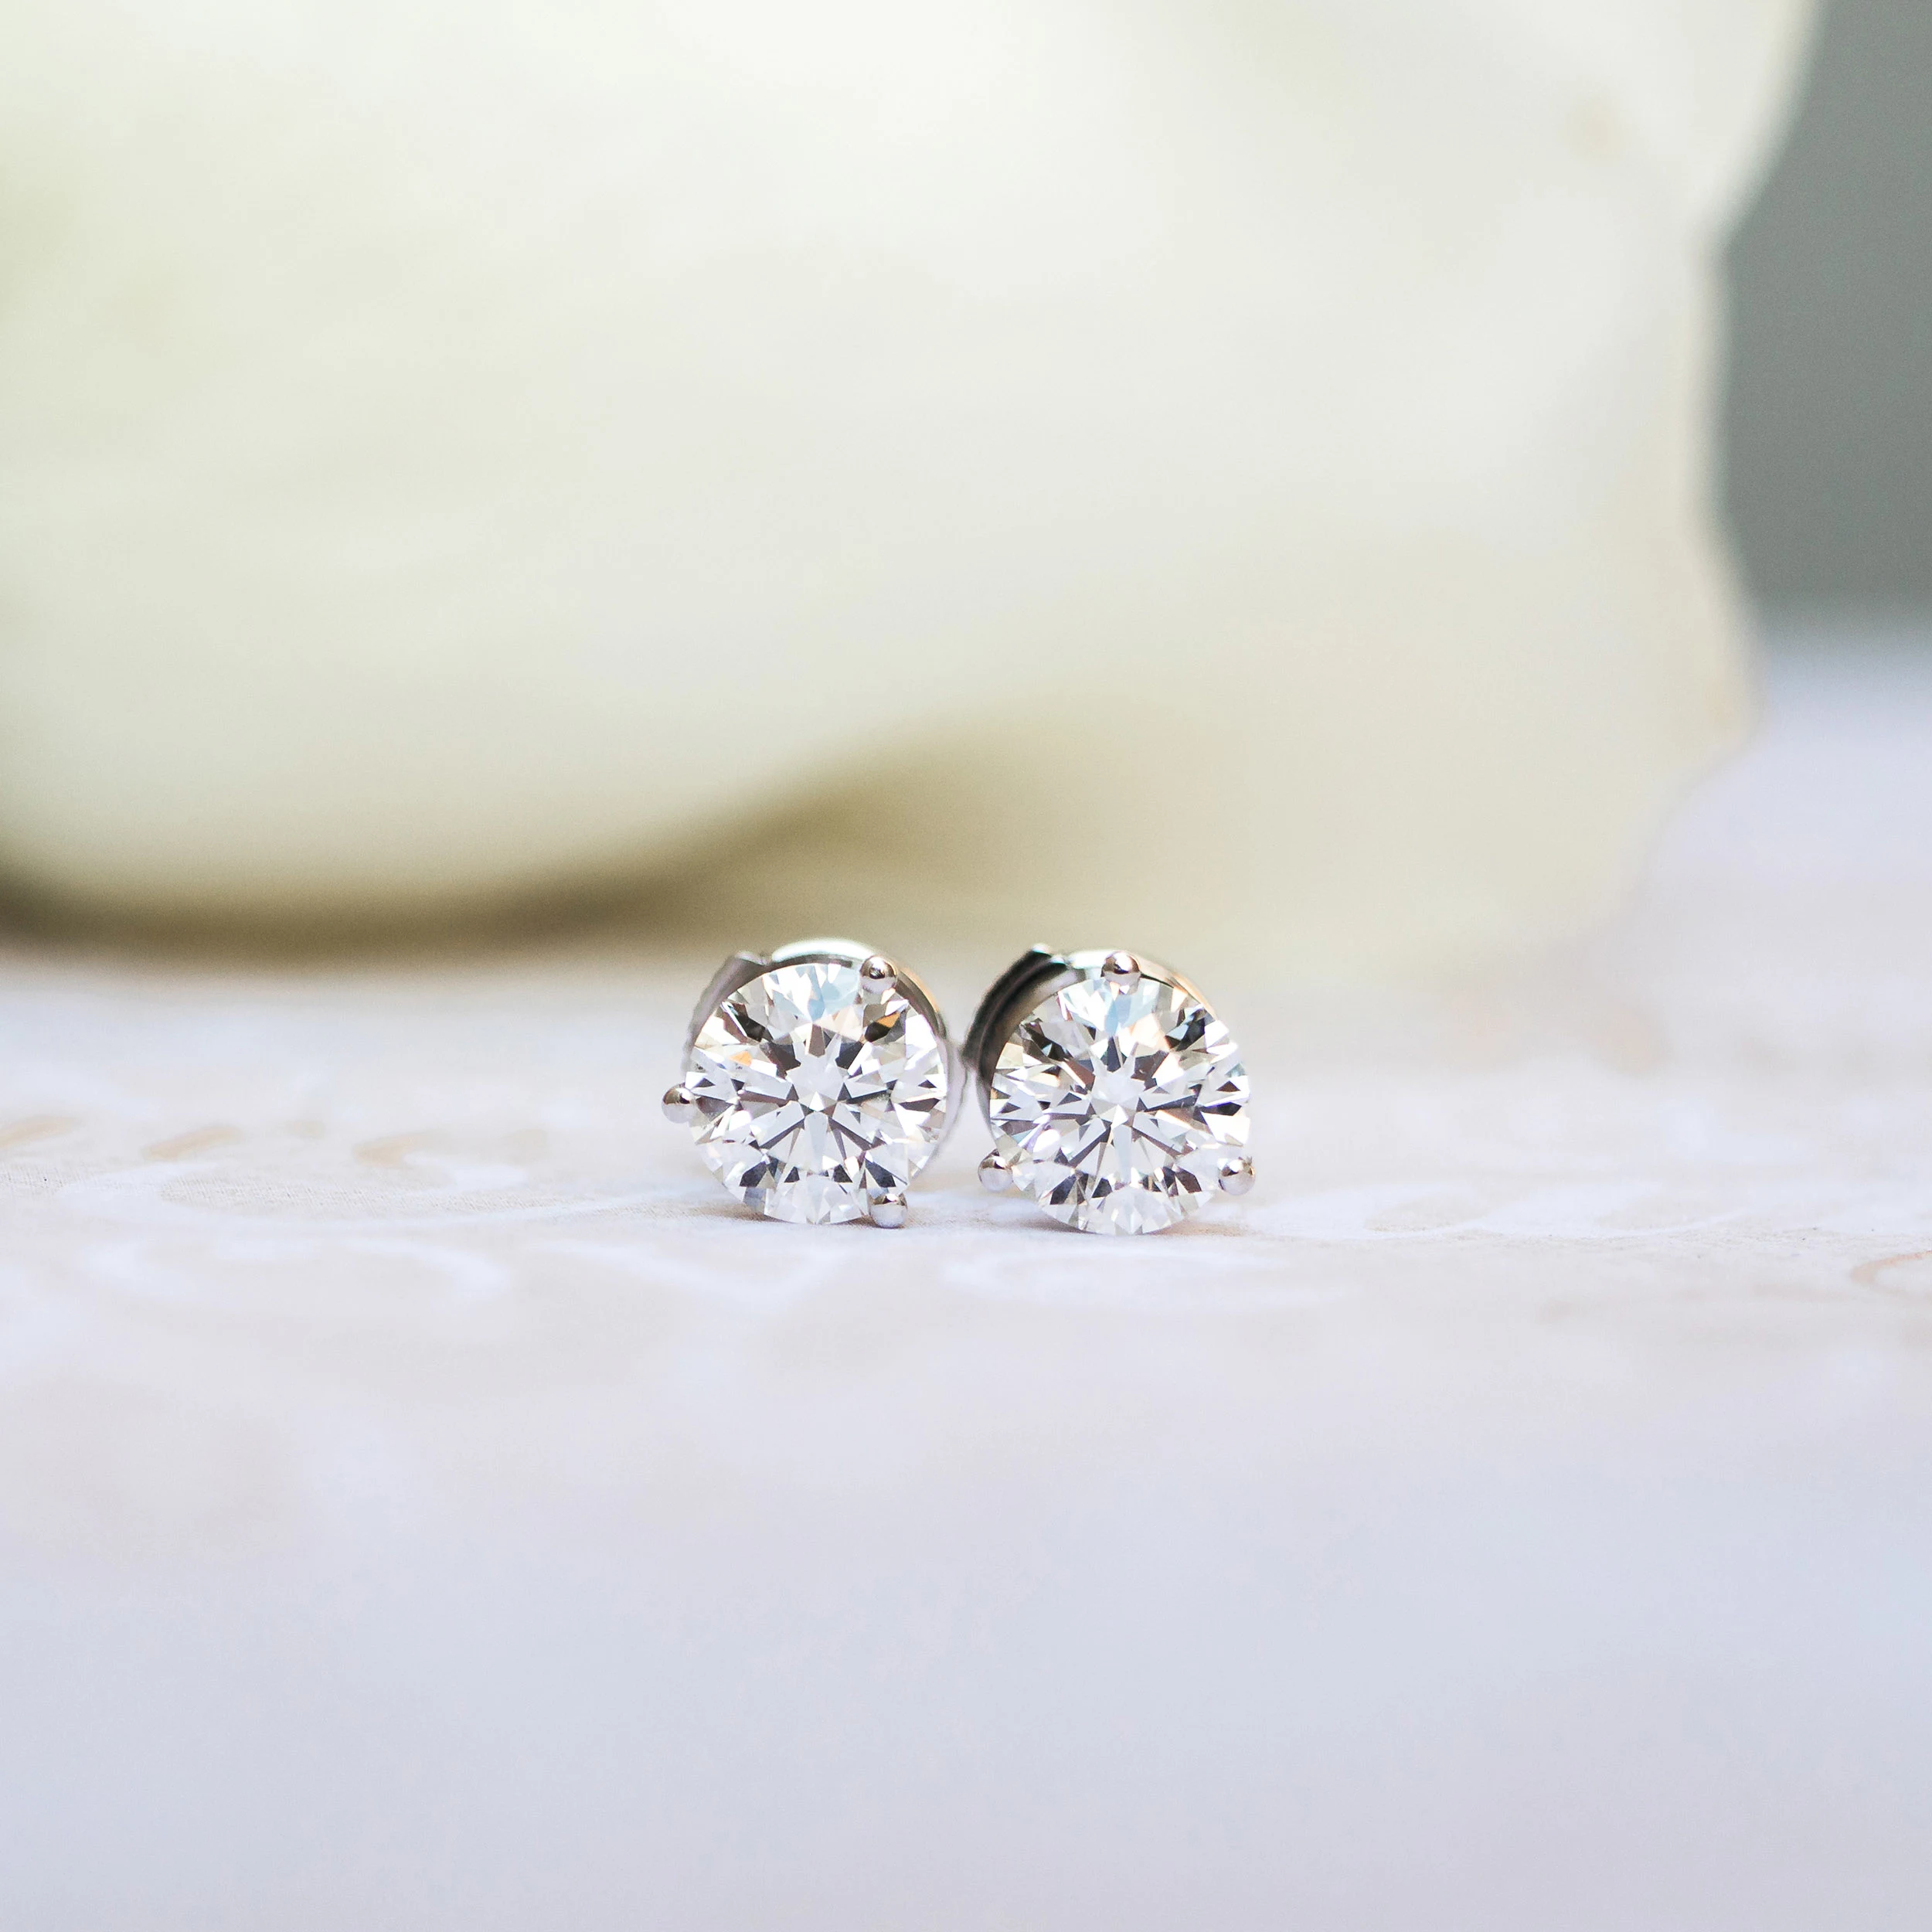 2.5 ct Round Diamonds set in 14k White Gold Martini Stud Earrings (Main View)